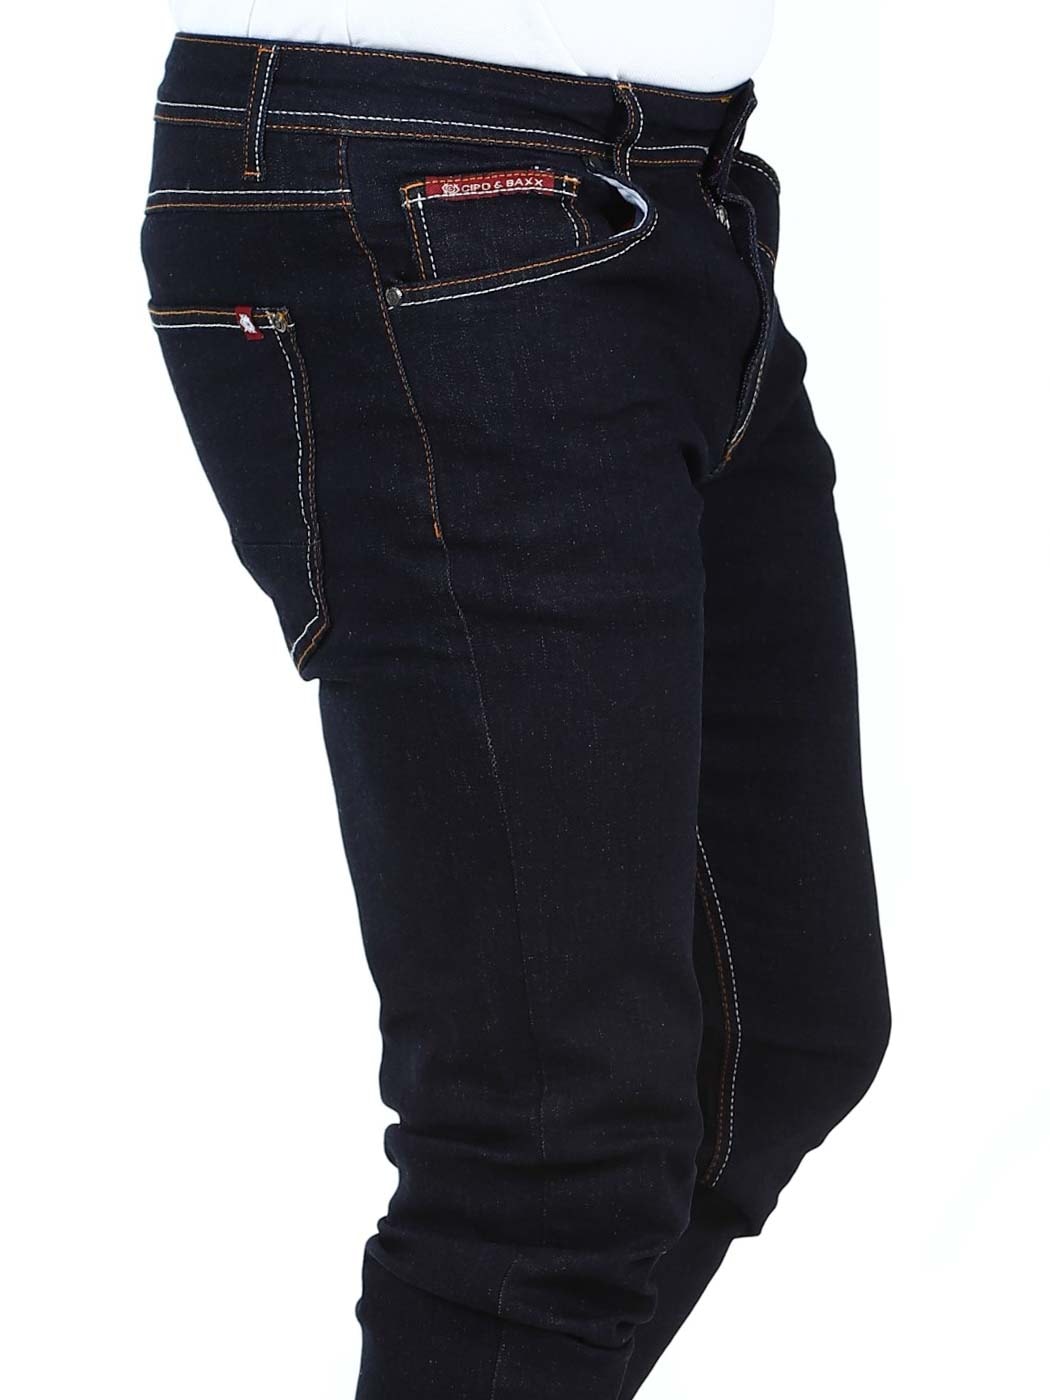 Callan Cipo  Baxx Jeans - Mørkebla NEW_4.jpg